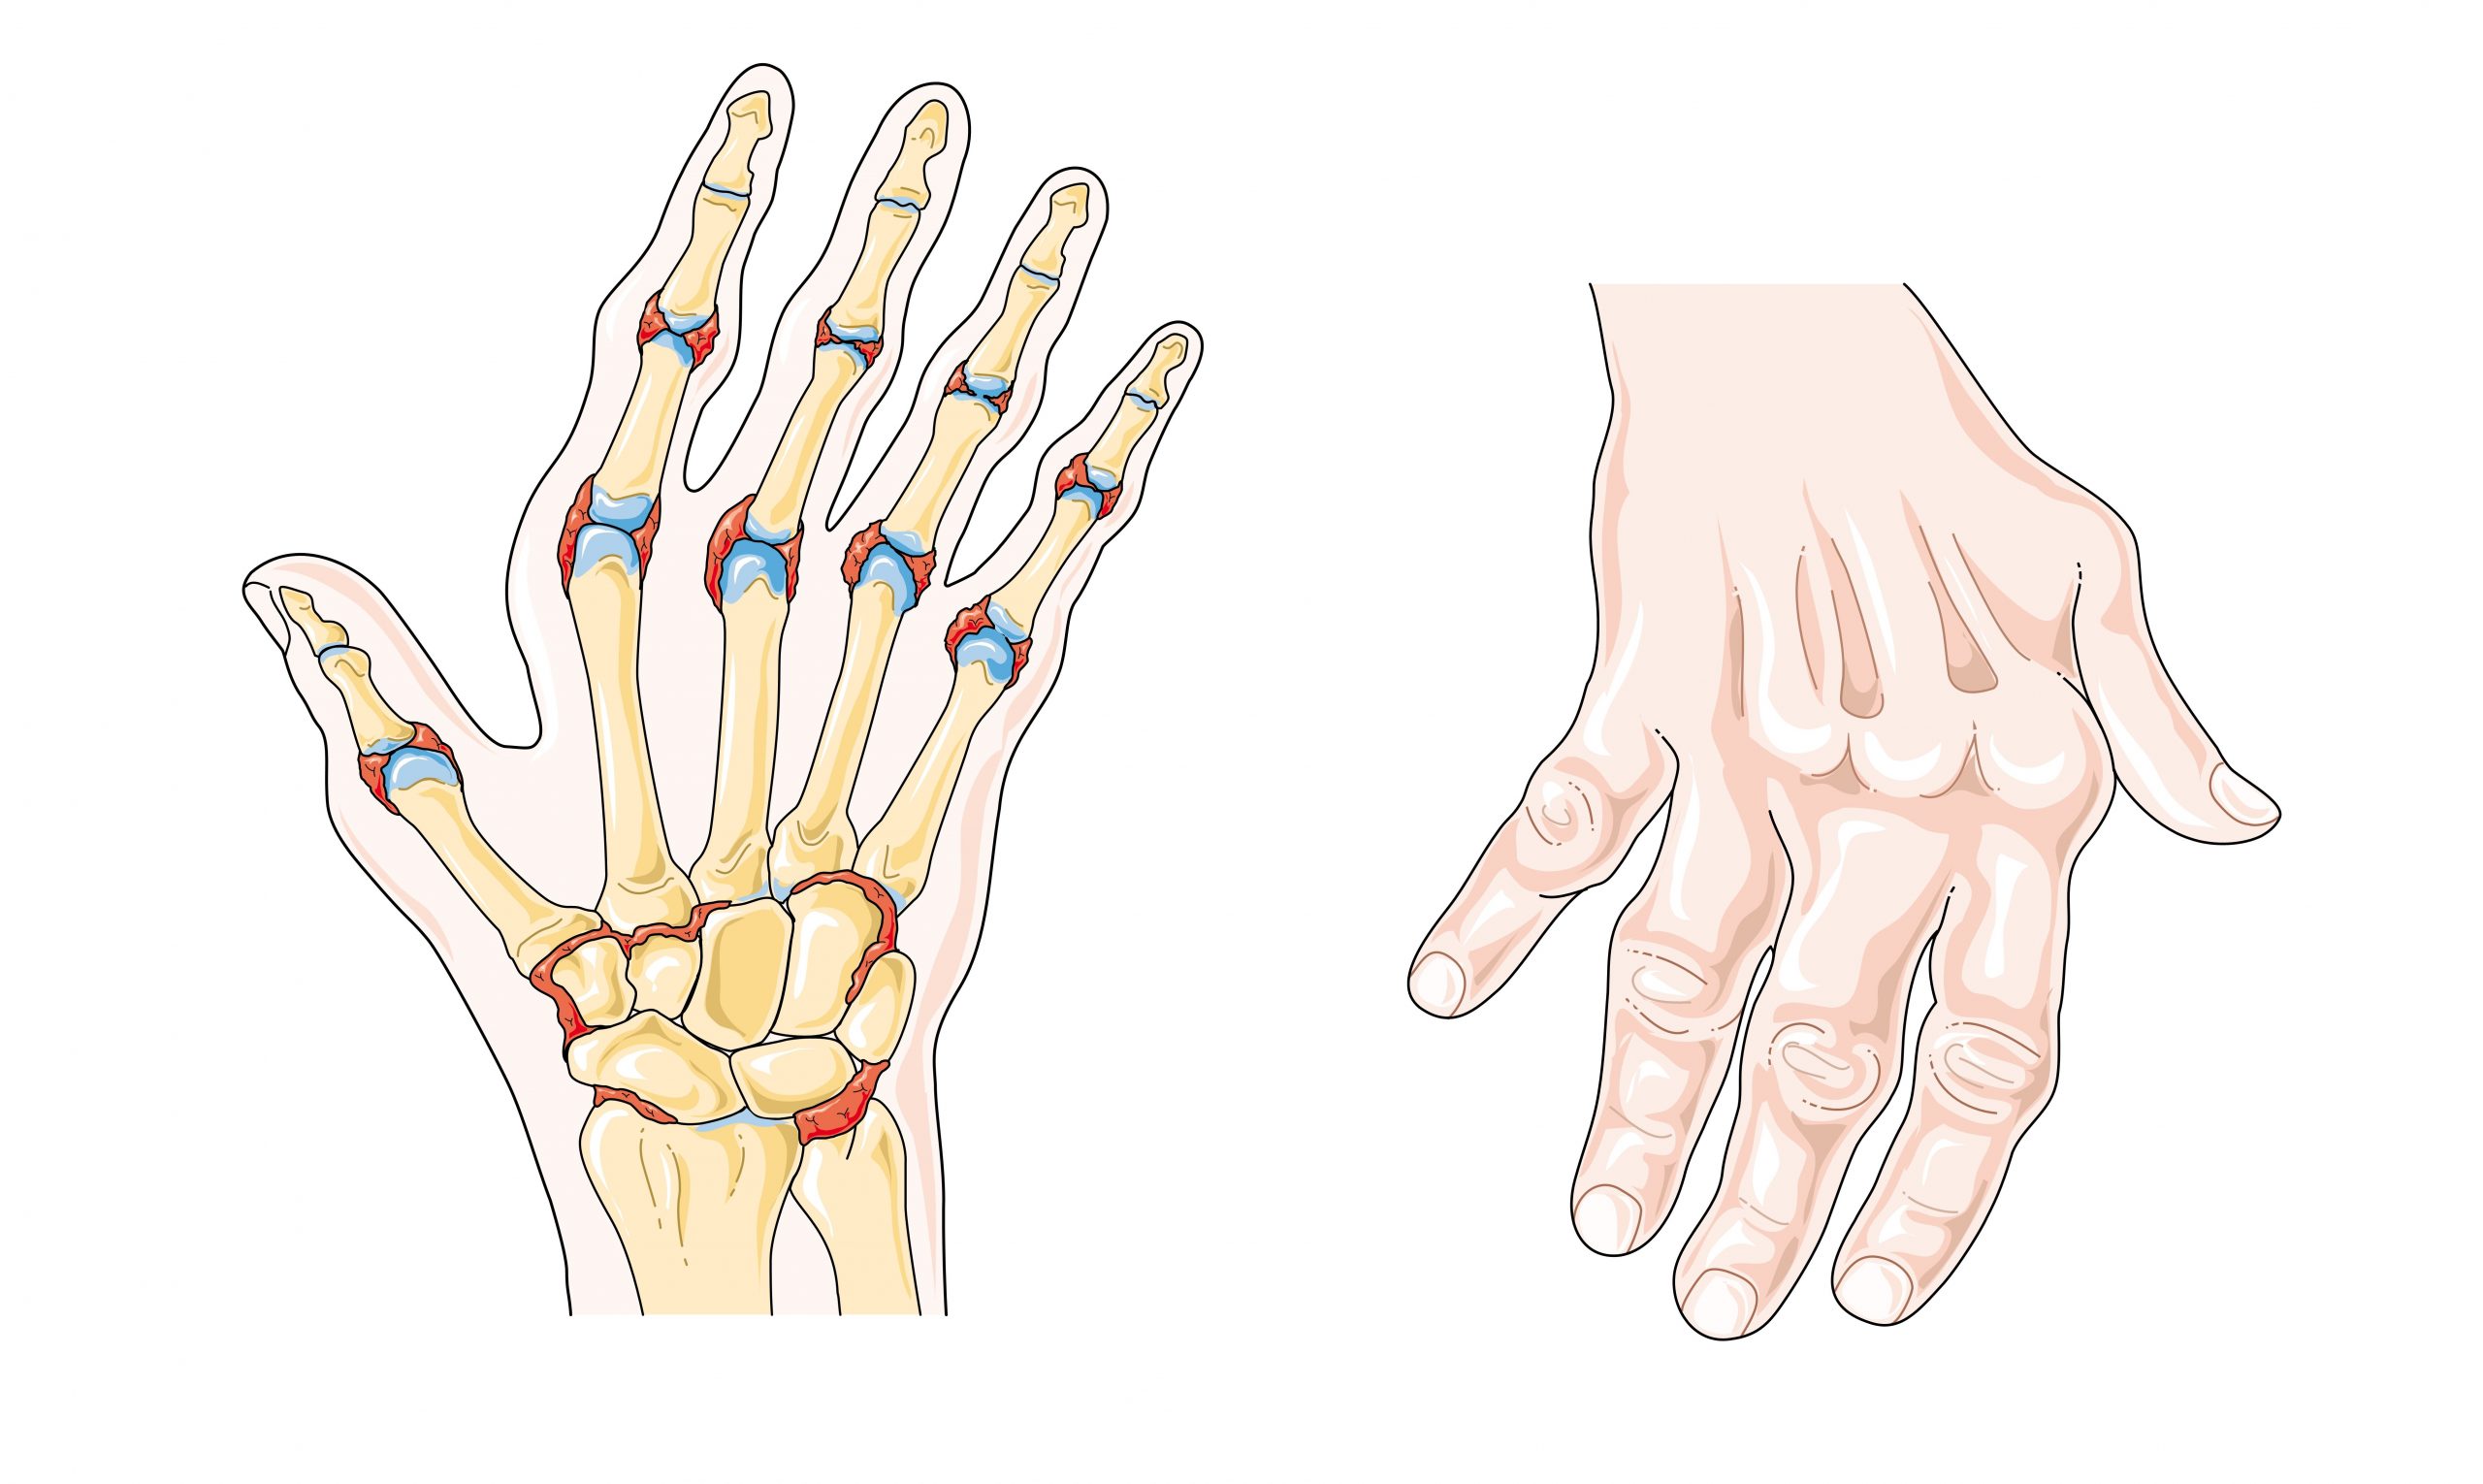 Illustration showing hands with rheumatoid arthritis